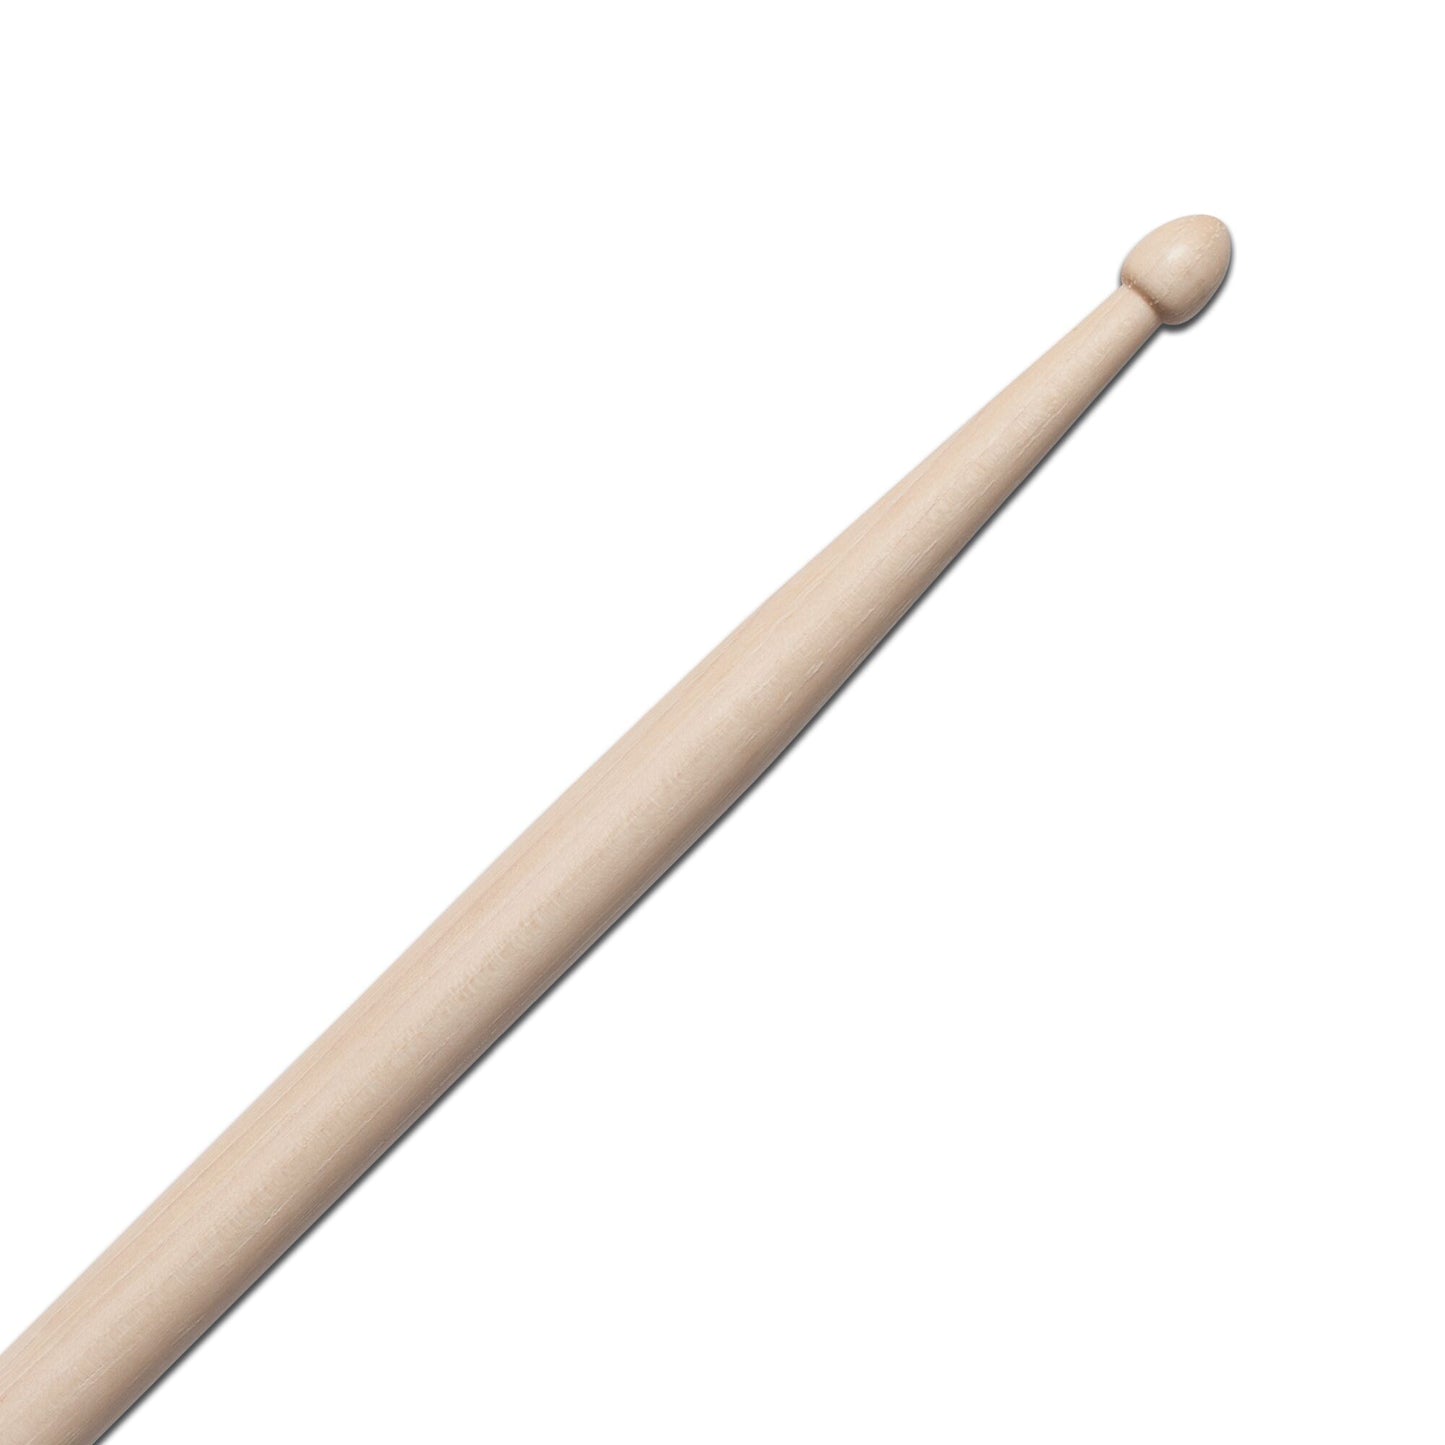 American Classic® 2B Drumsticks